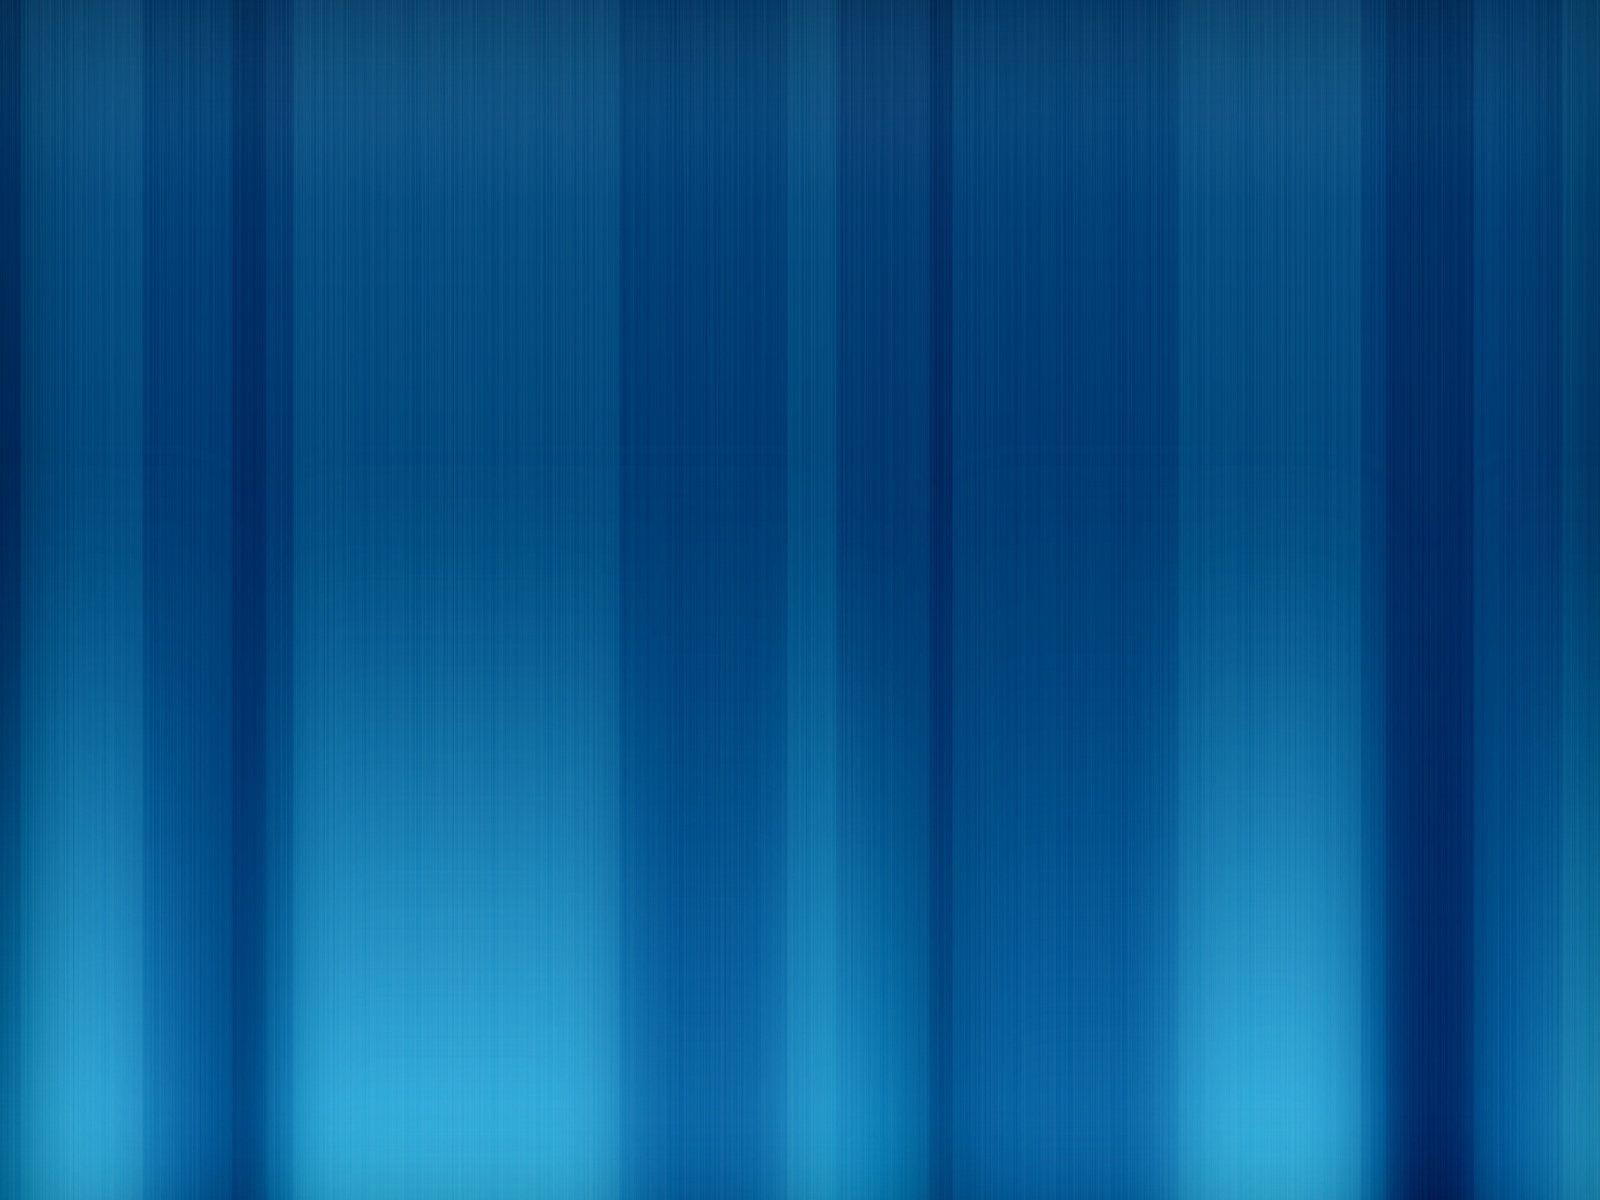 Blue wallpaper - Blue Wallpaper (23886910) - Fanpop